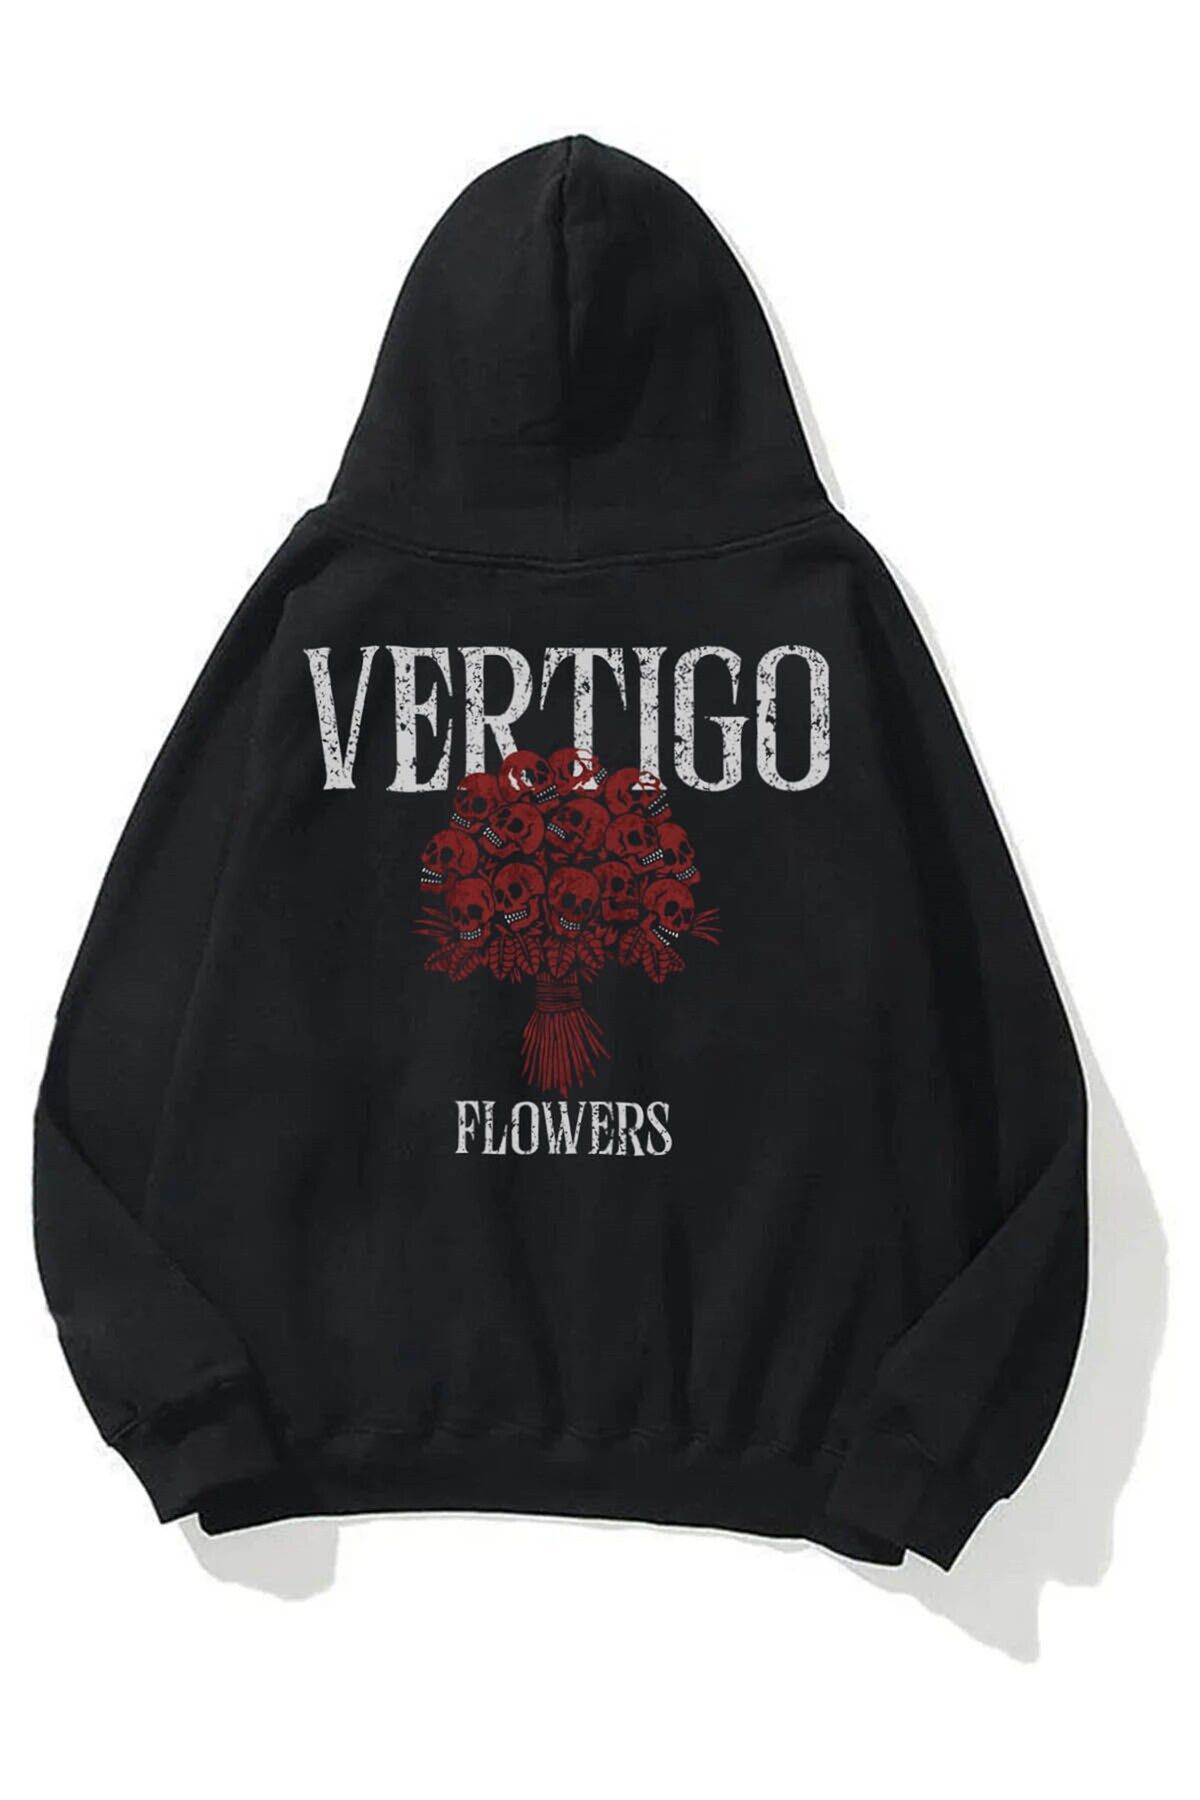 Trendiz Unisex Vergito Flower Sweatshirt Hoodie